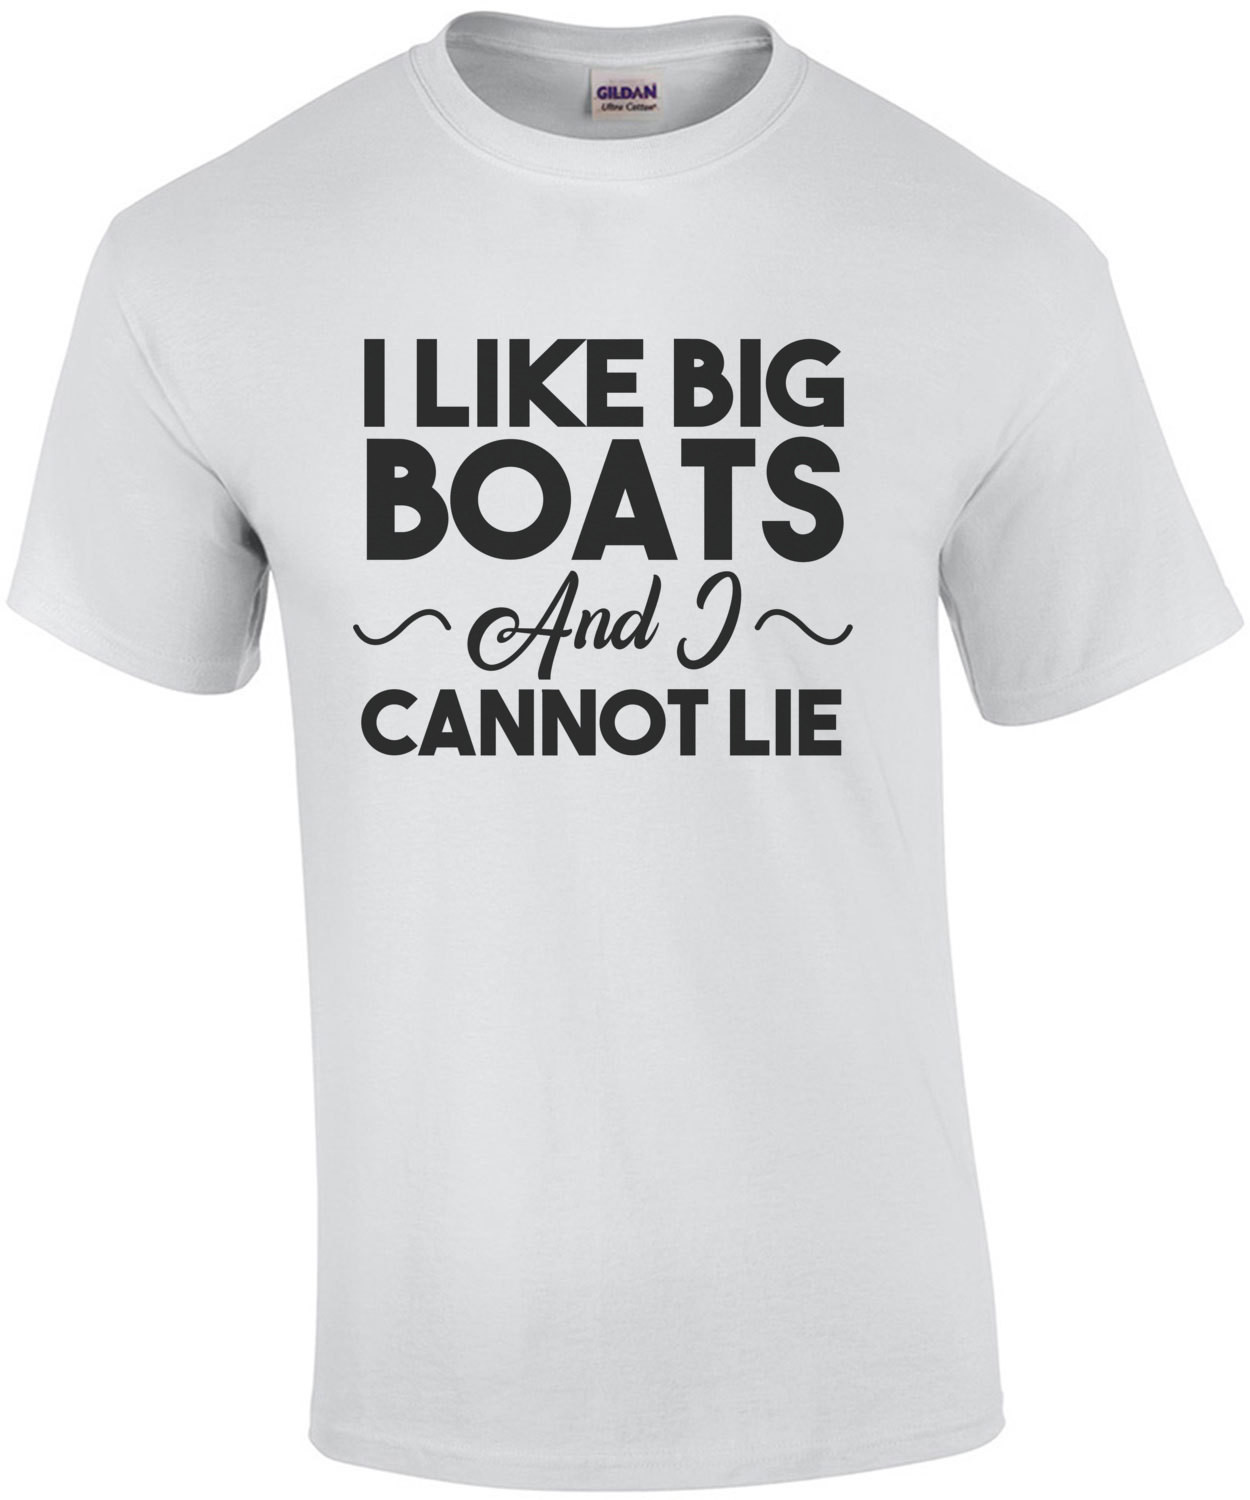 I like big boats and I cannot lie - funny sir mix-a-lot parody t-shirt